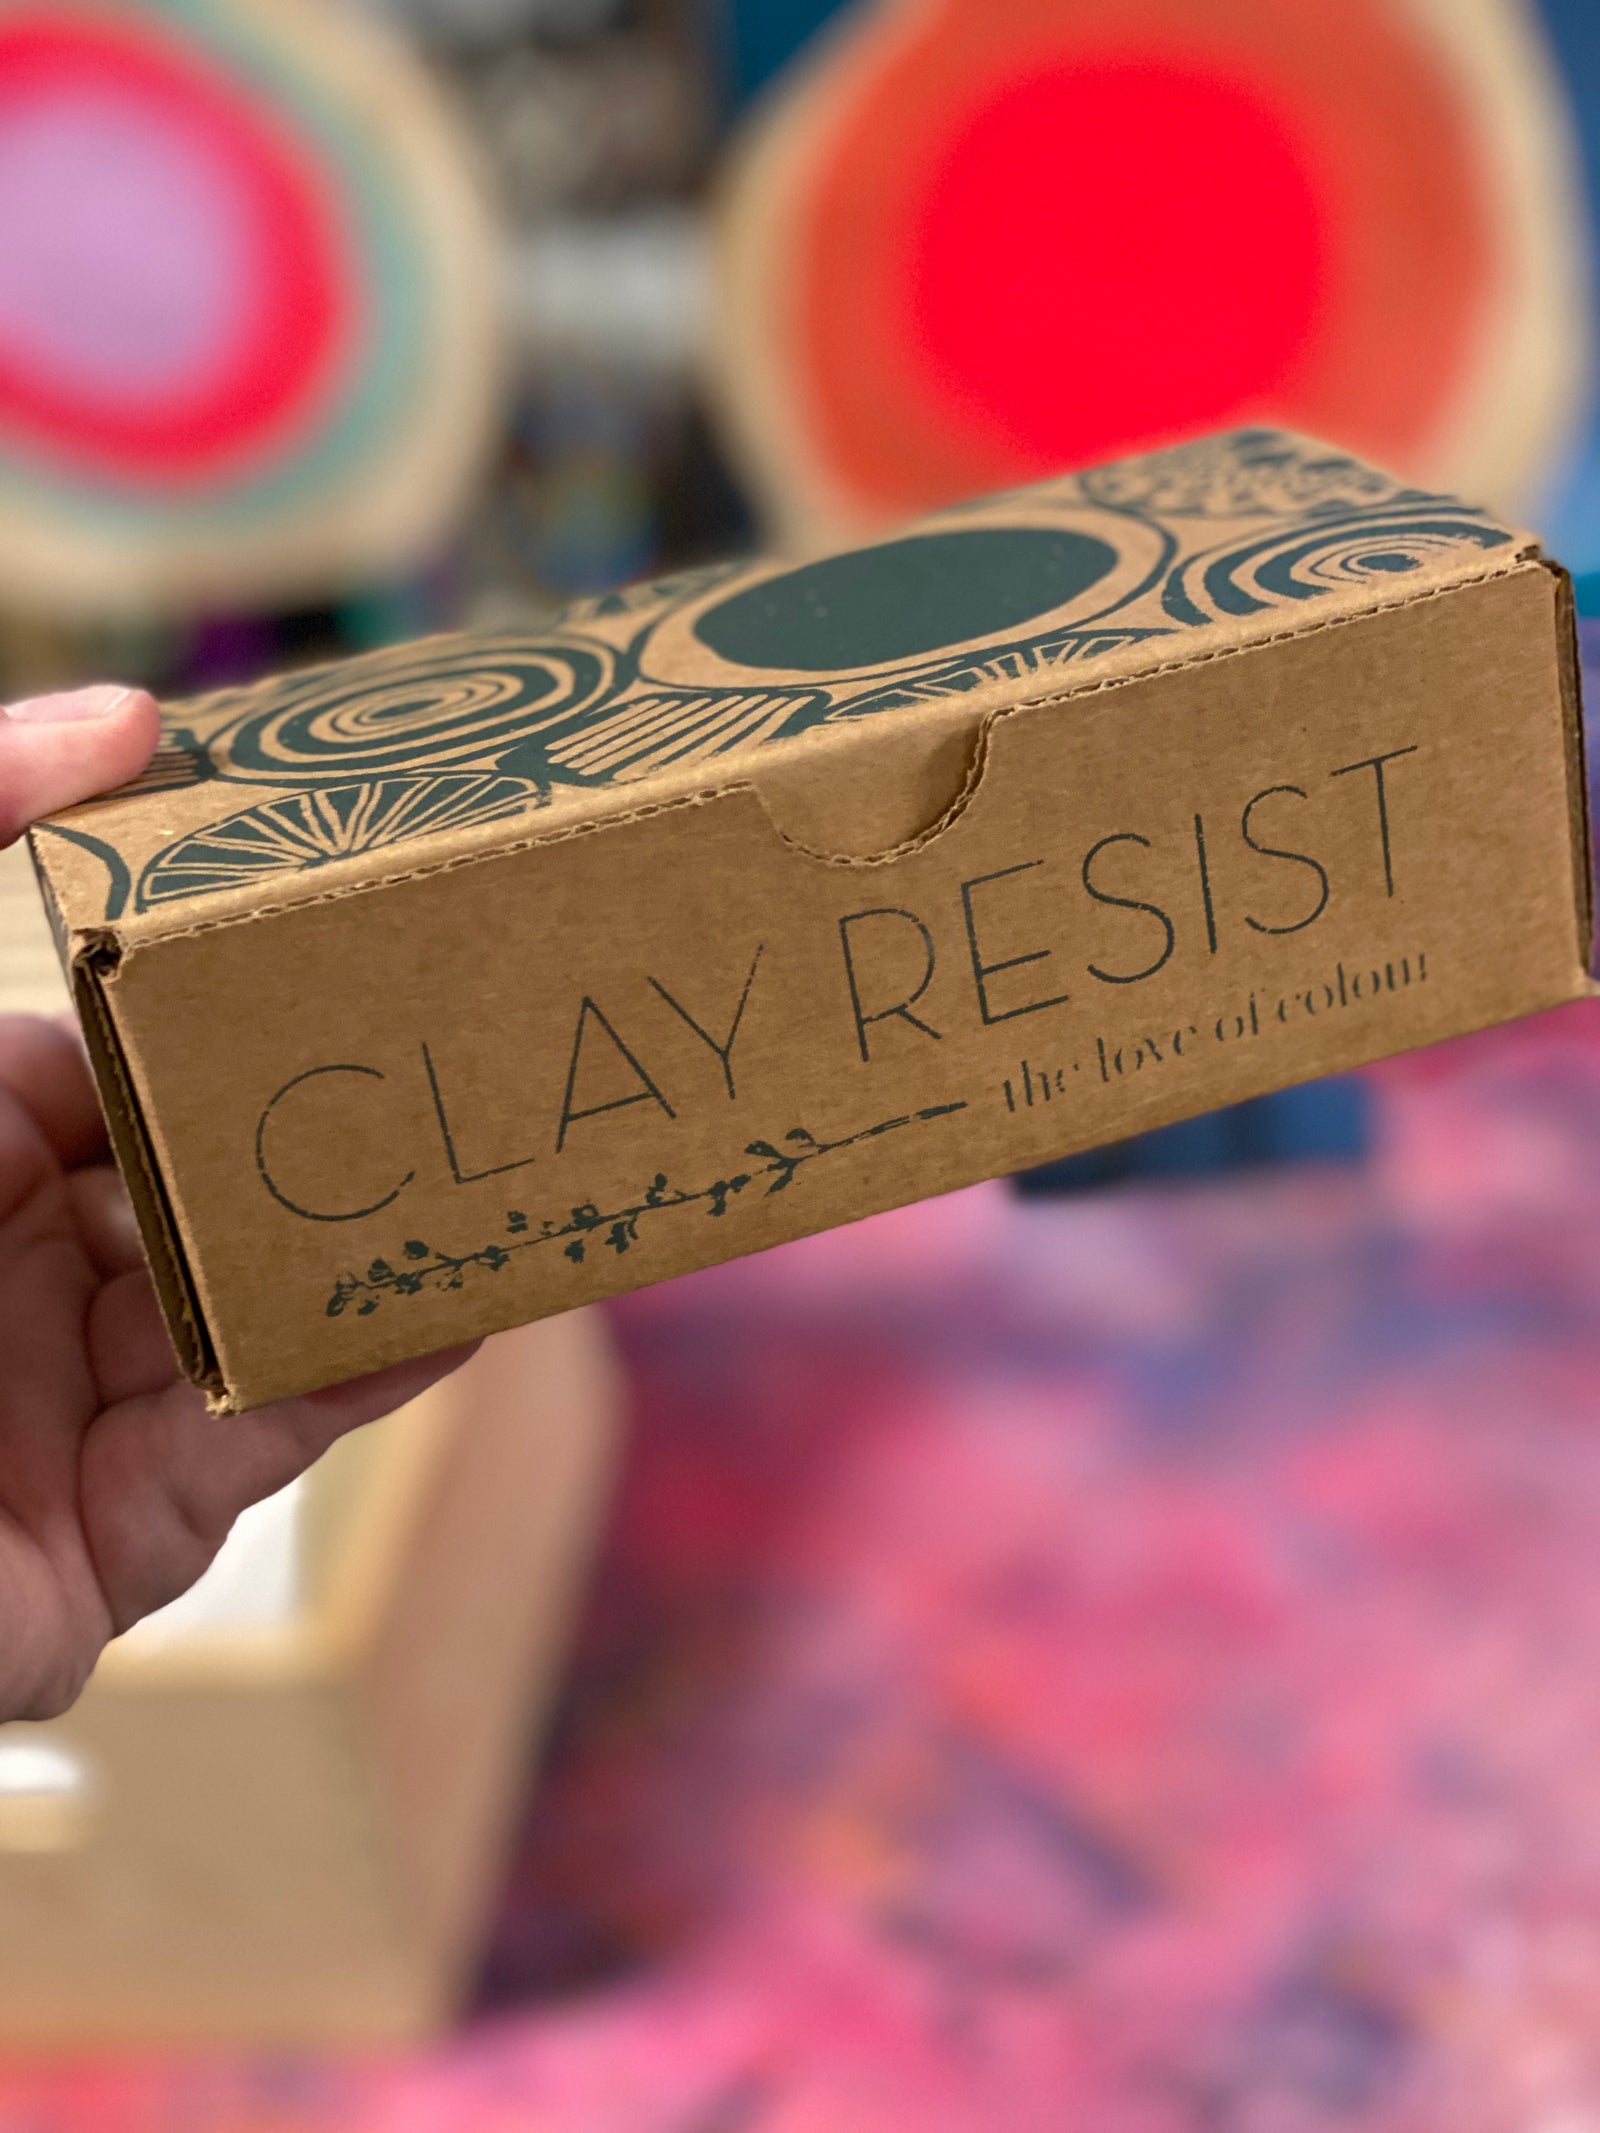 DIY - Dyeing - Clay Resist